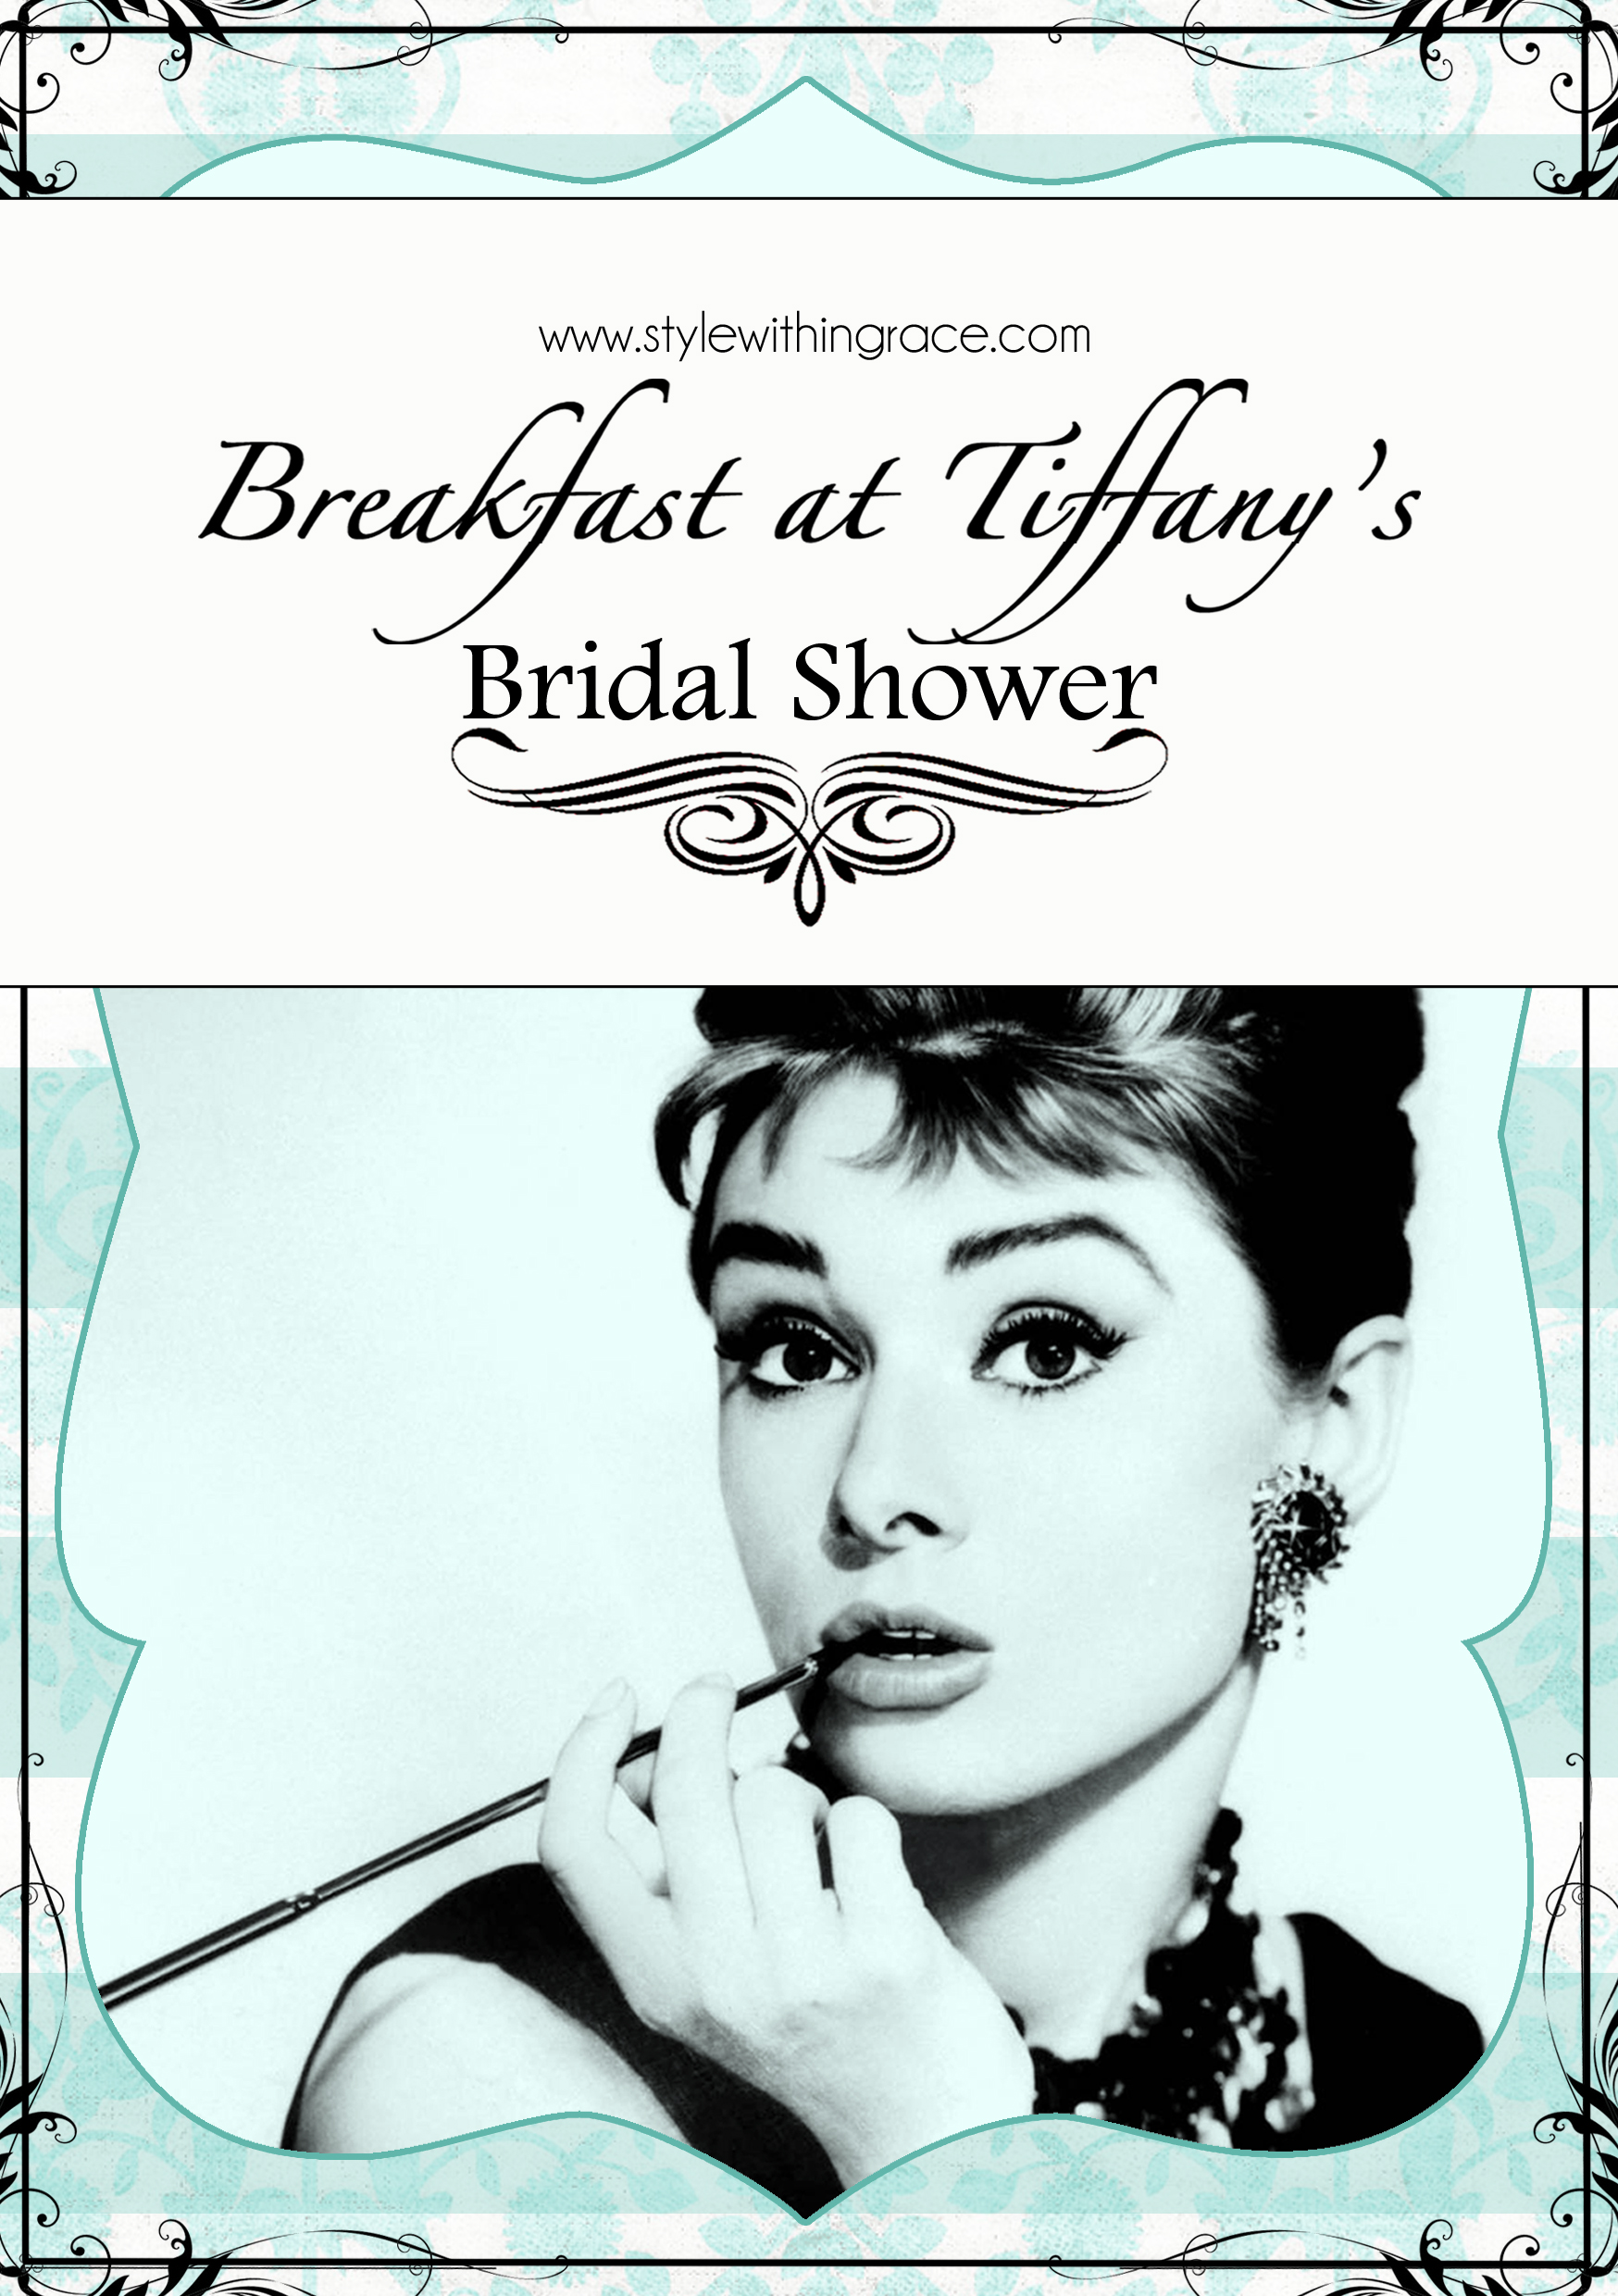 Breakfast at Tiffany's Bridal Shower Title